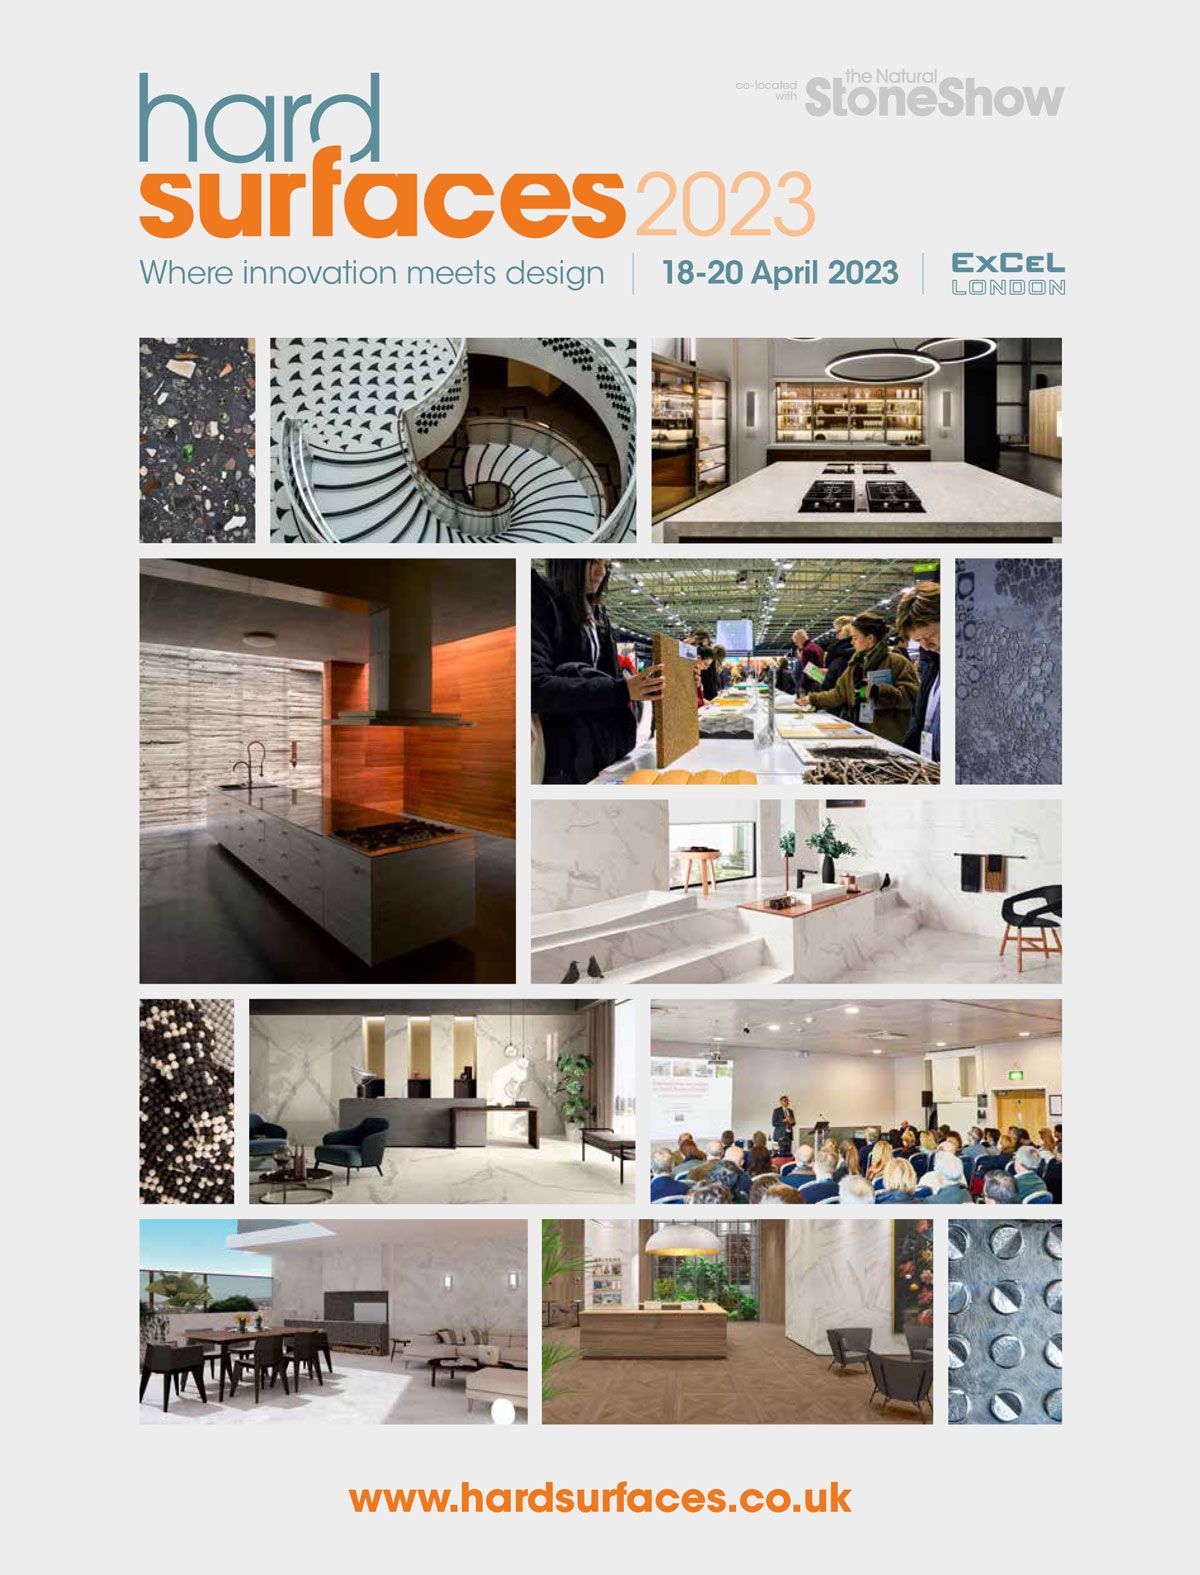 Hard Surfaces exhibitor brochure